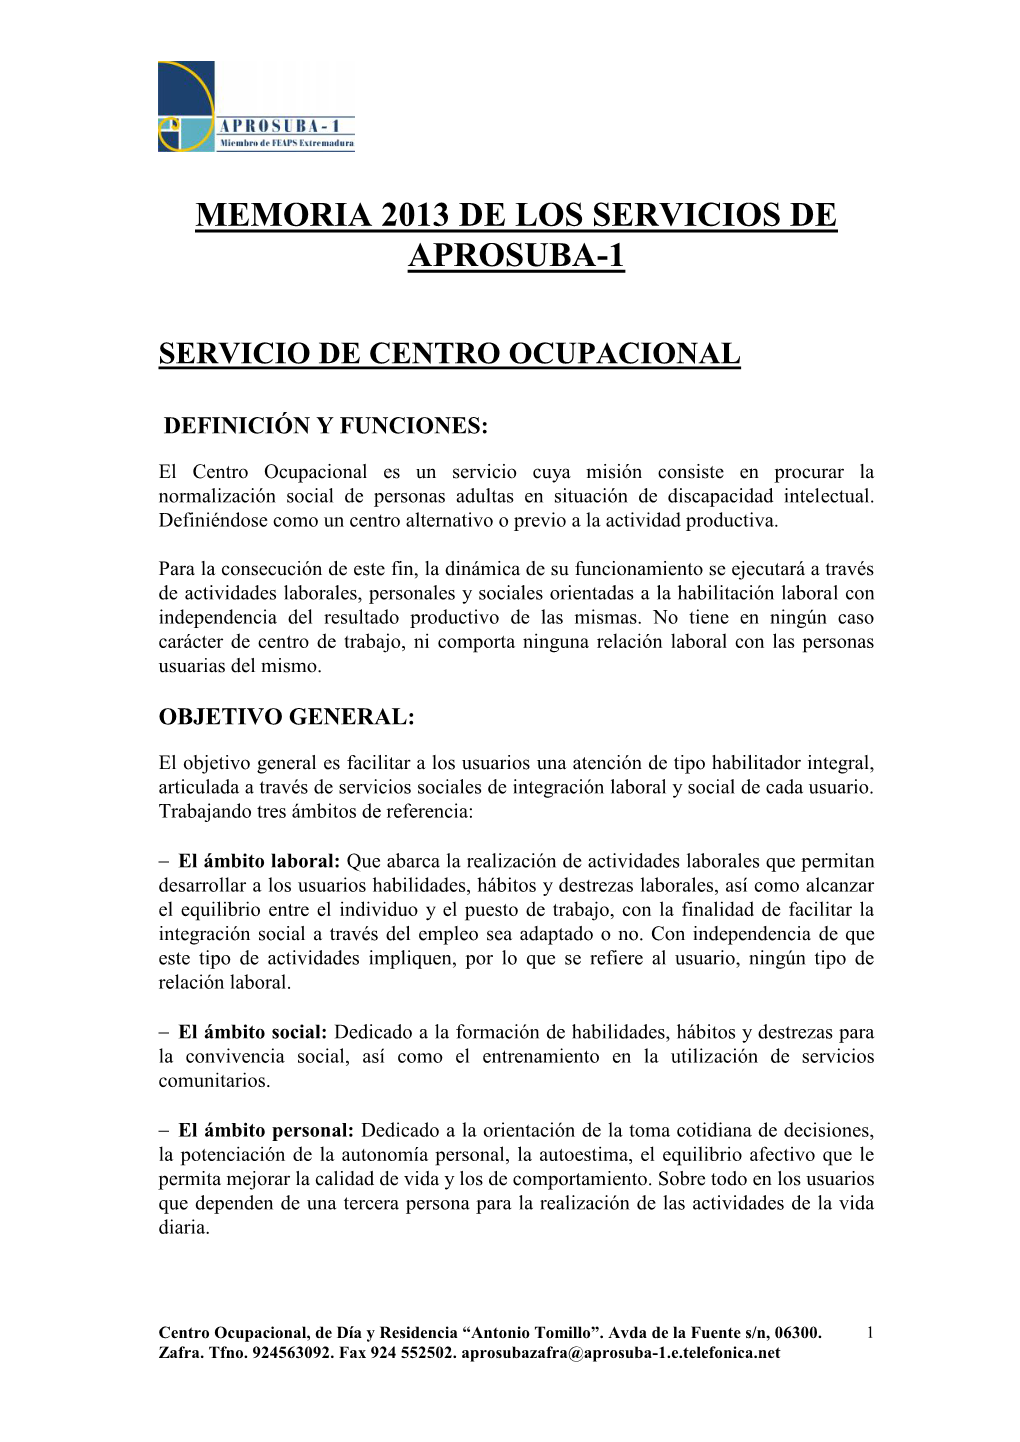 Reglamento De Régimen Interior Del C. Ocupacional Aprosuba-13